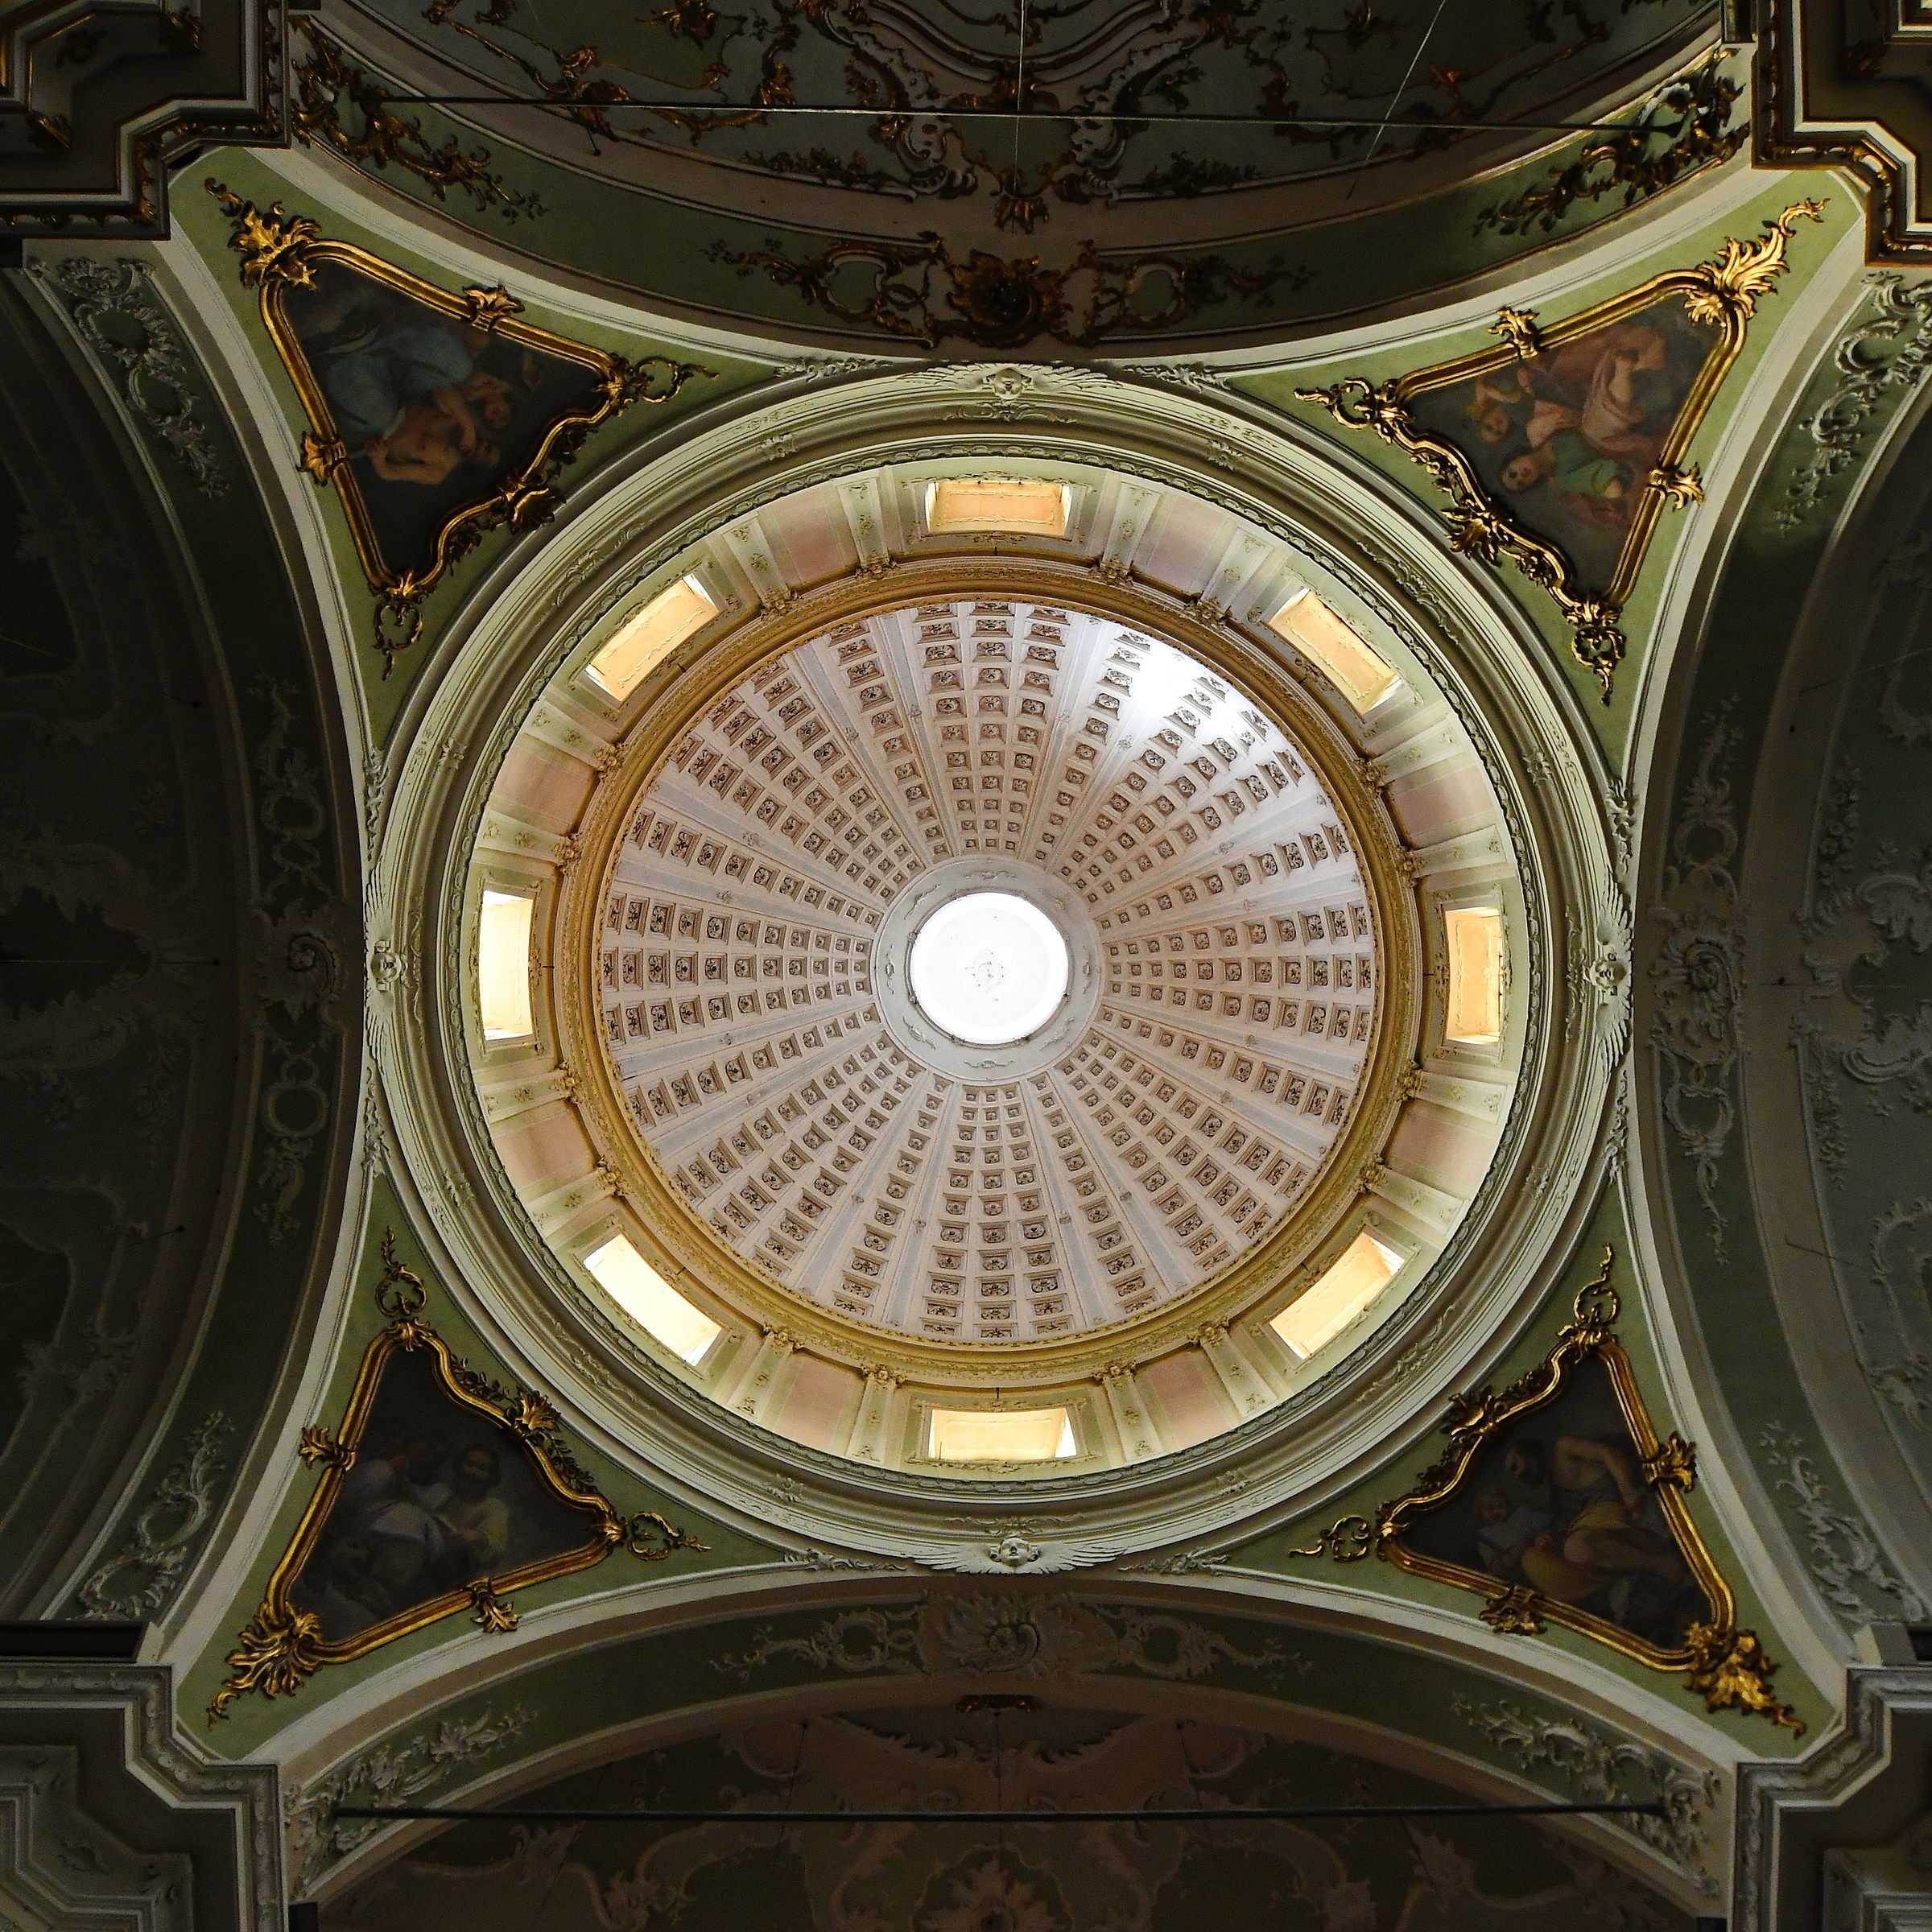 Pontremoli (MS)-Dome of the concathedral of Santa M...